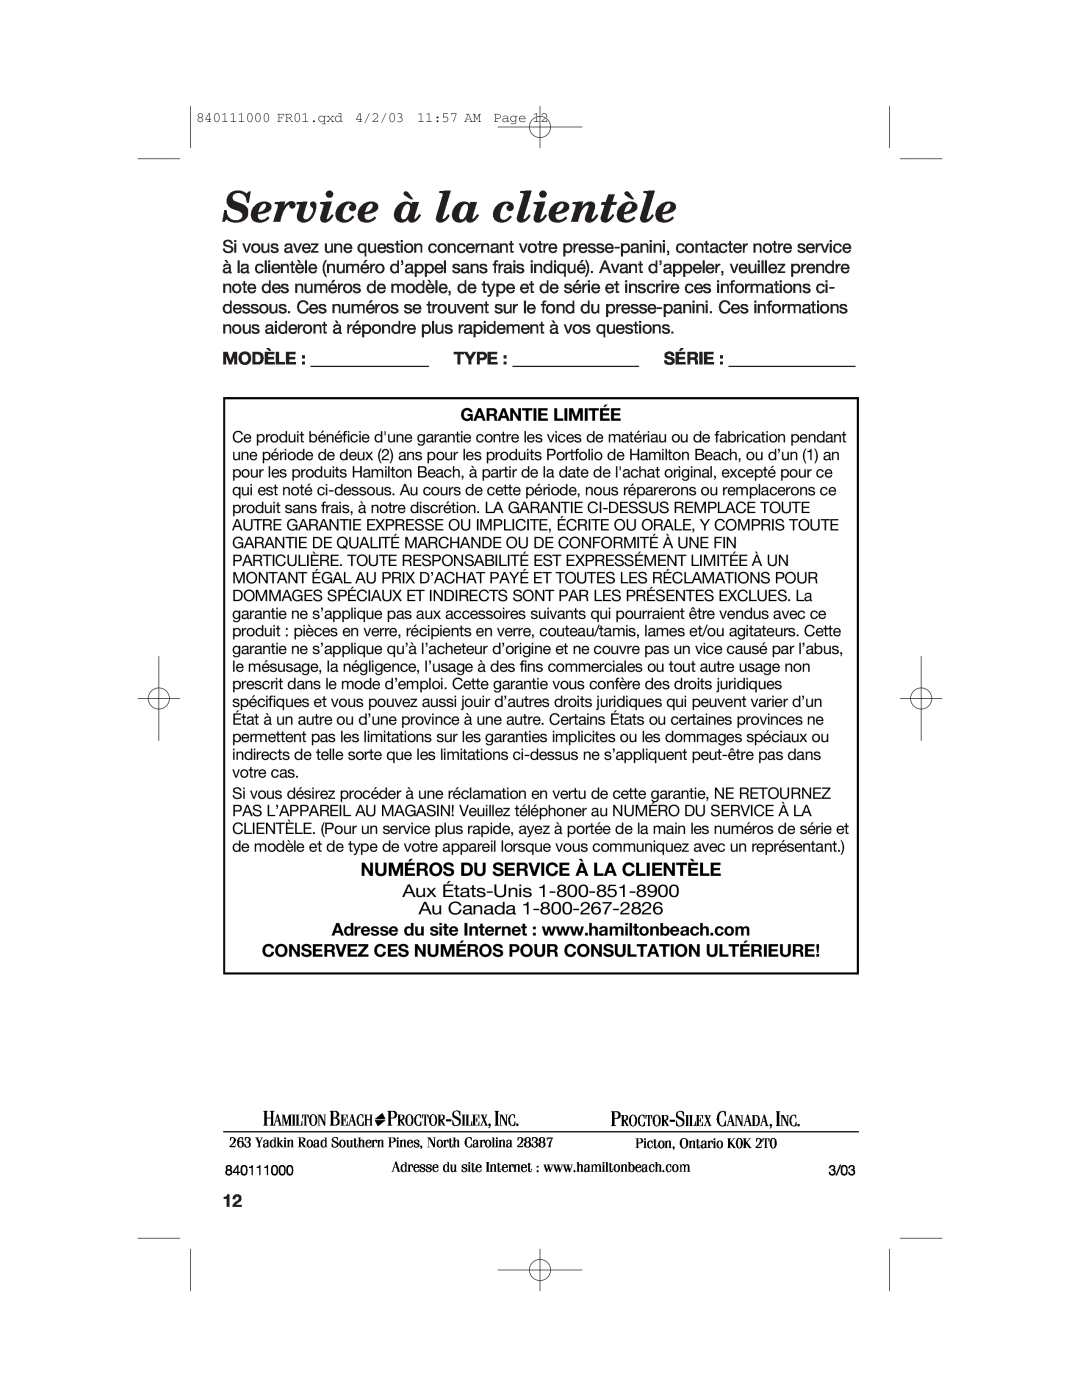 Hamilton Beach 25450 operating instructions Service à la clientèle, Numéros Du Service À La Clientèle, Garantie Limitée 